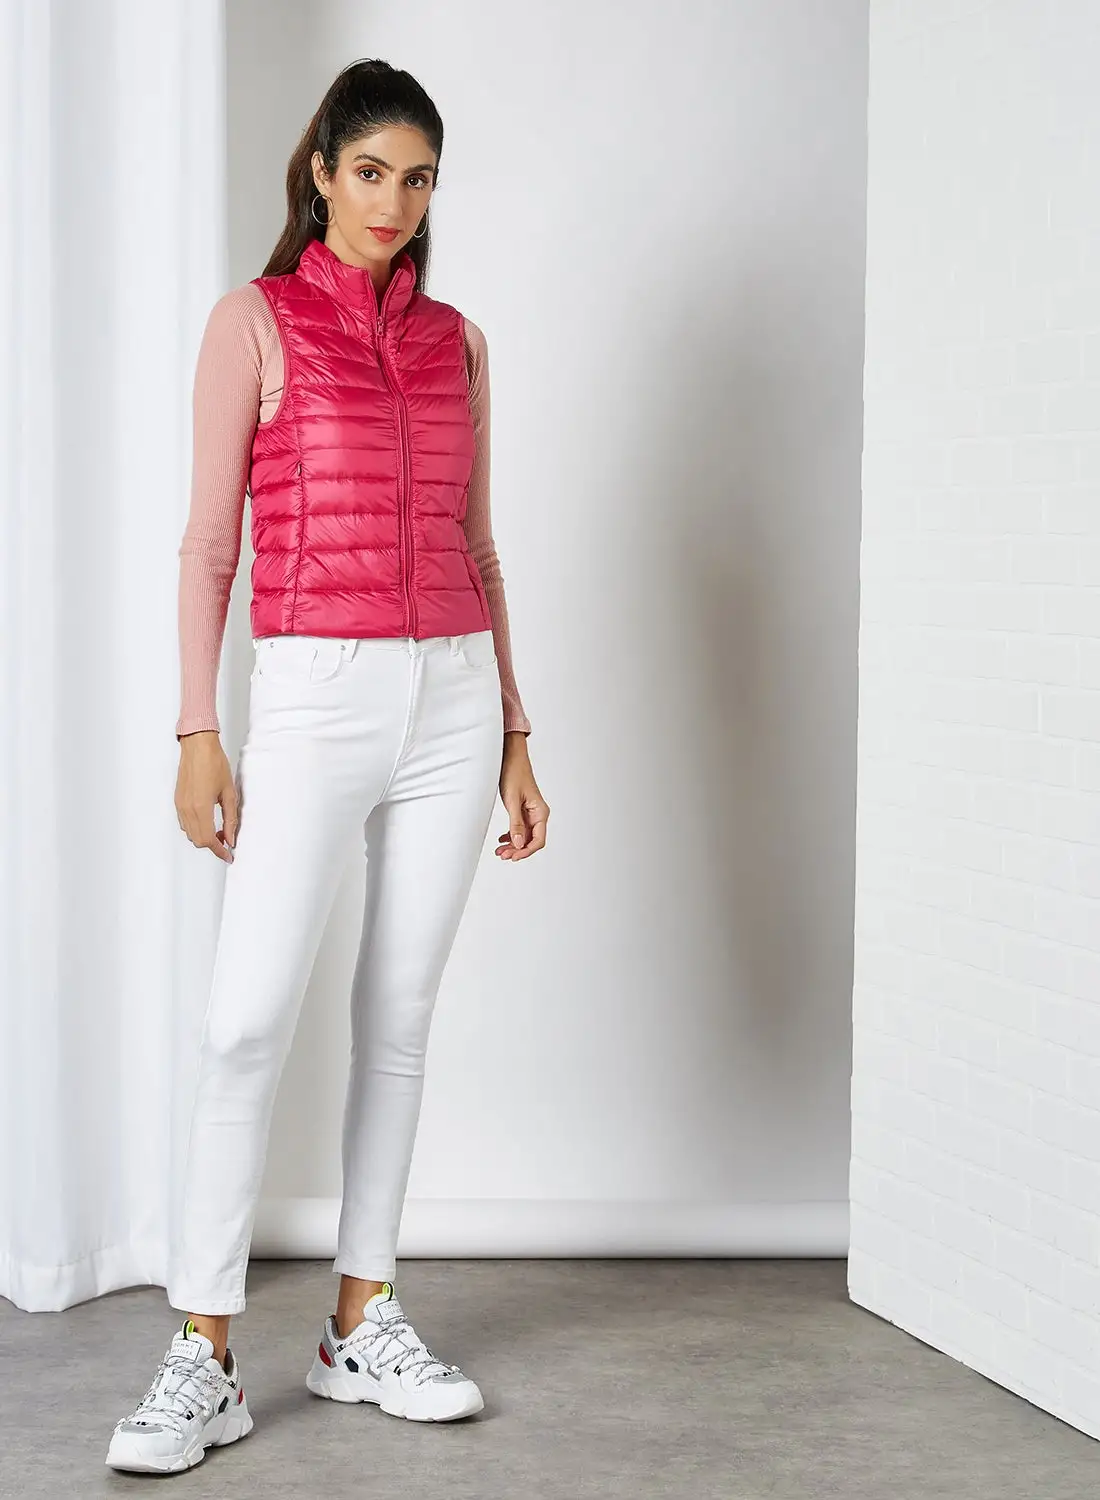 Anaqa Solid Design Sleeveless Down Jacket Pink